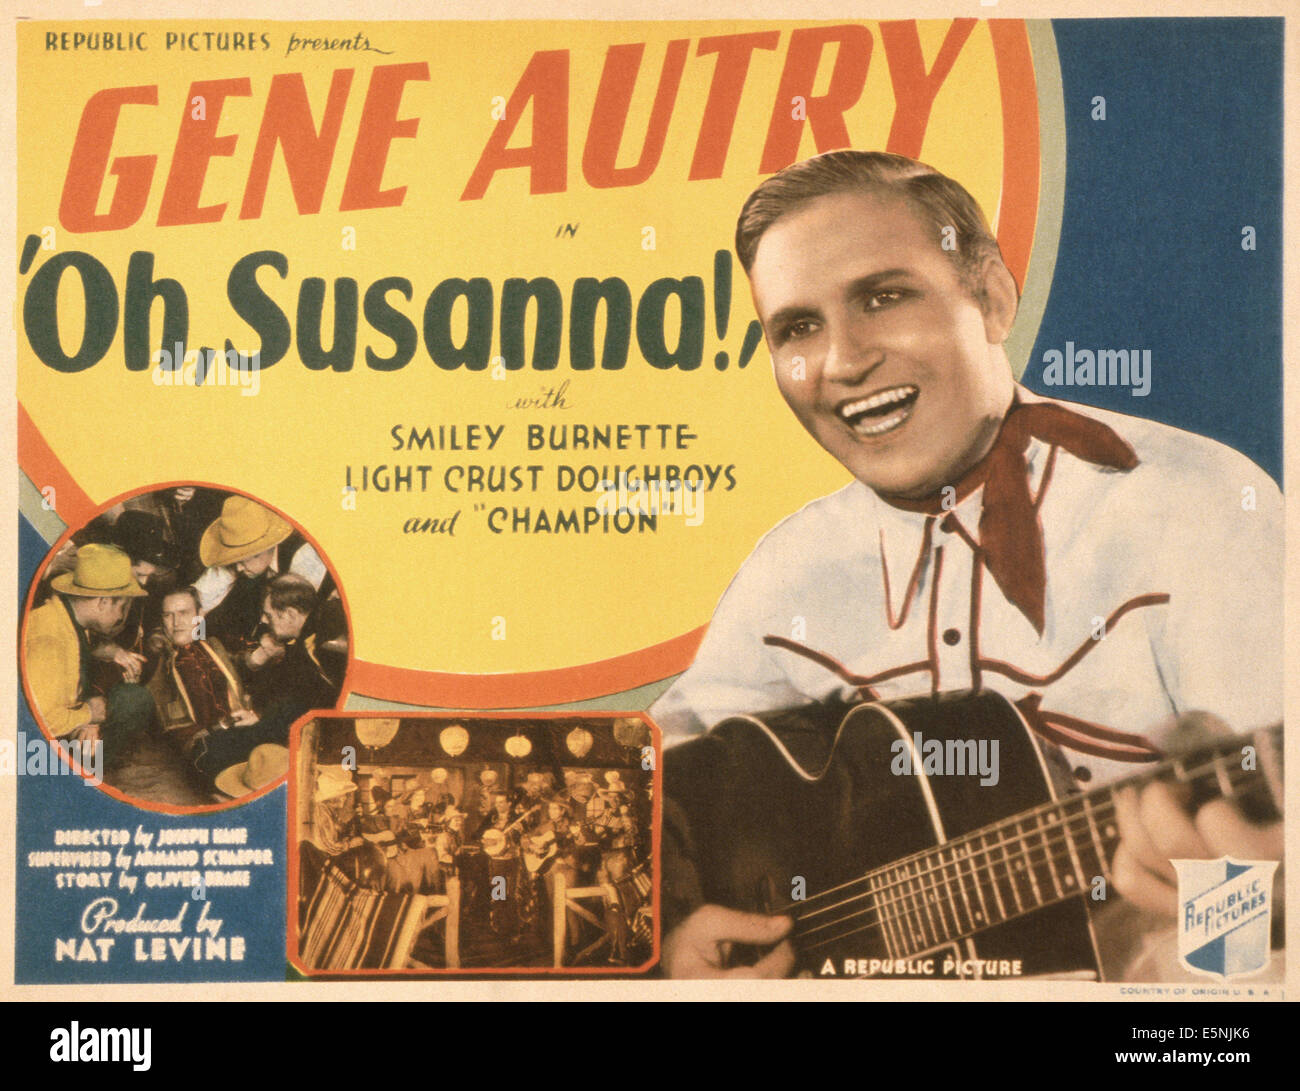 SWING IT, US poster, Louis Prima, 1936 Stock Photo - Alamy